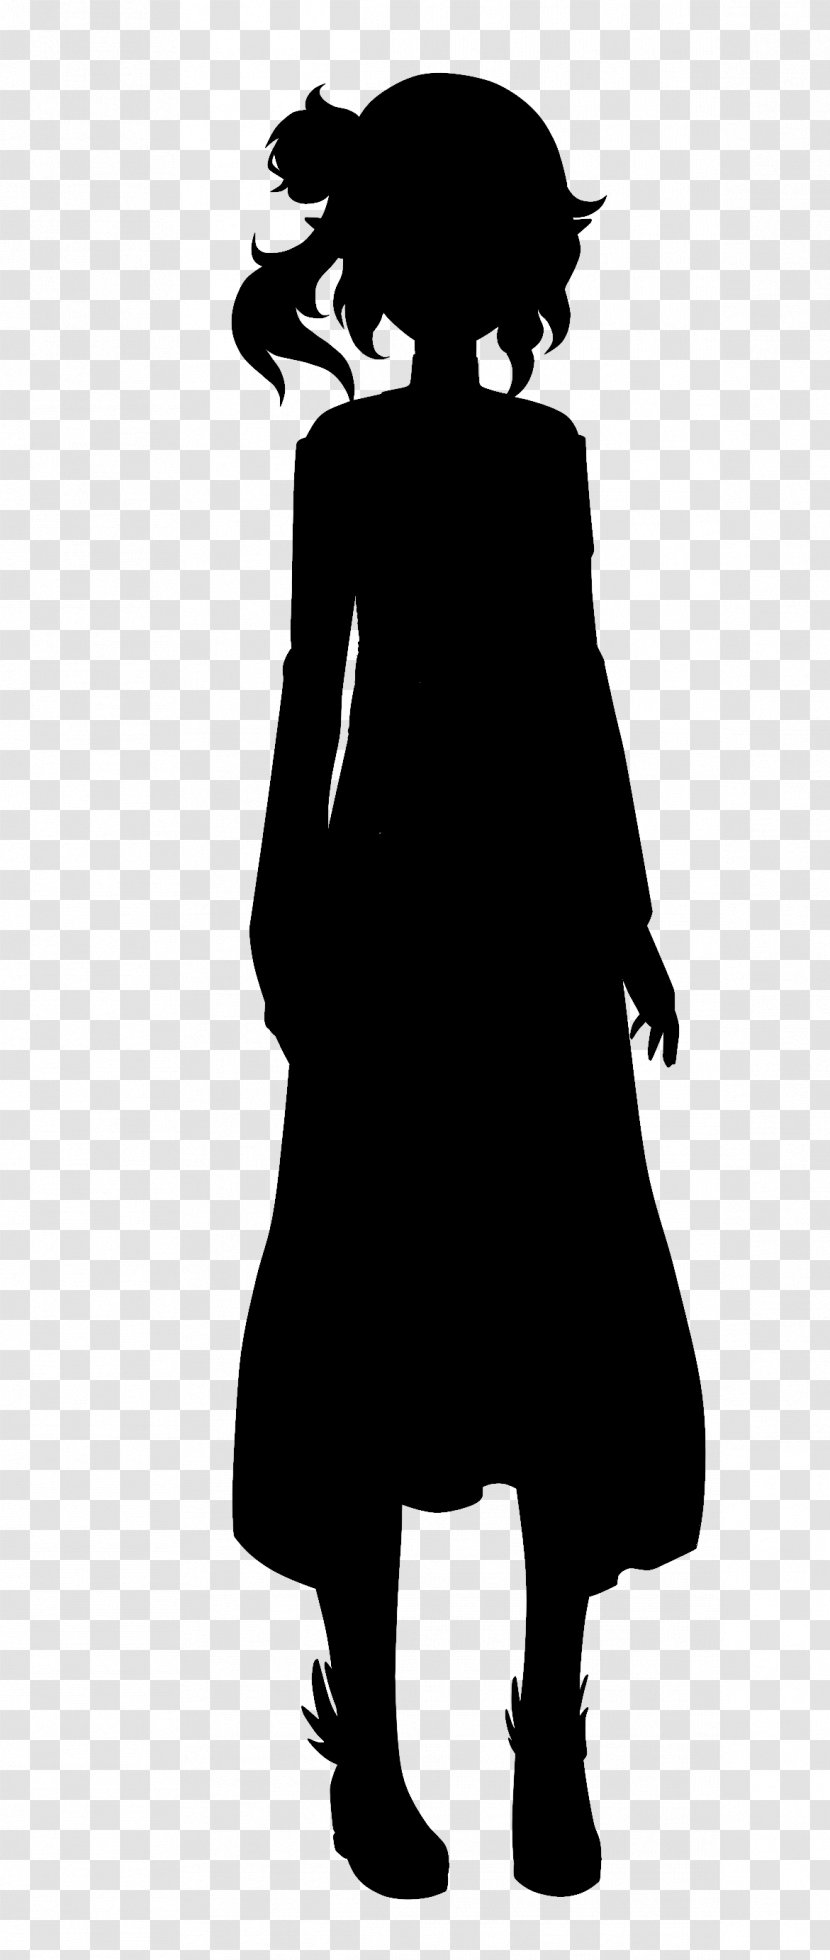 Human Behavior Character Silhouette - Little Black Dress Transparent PNG